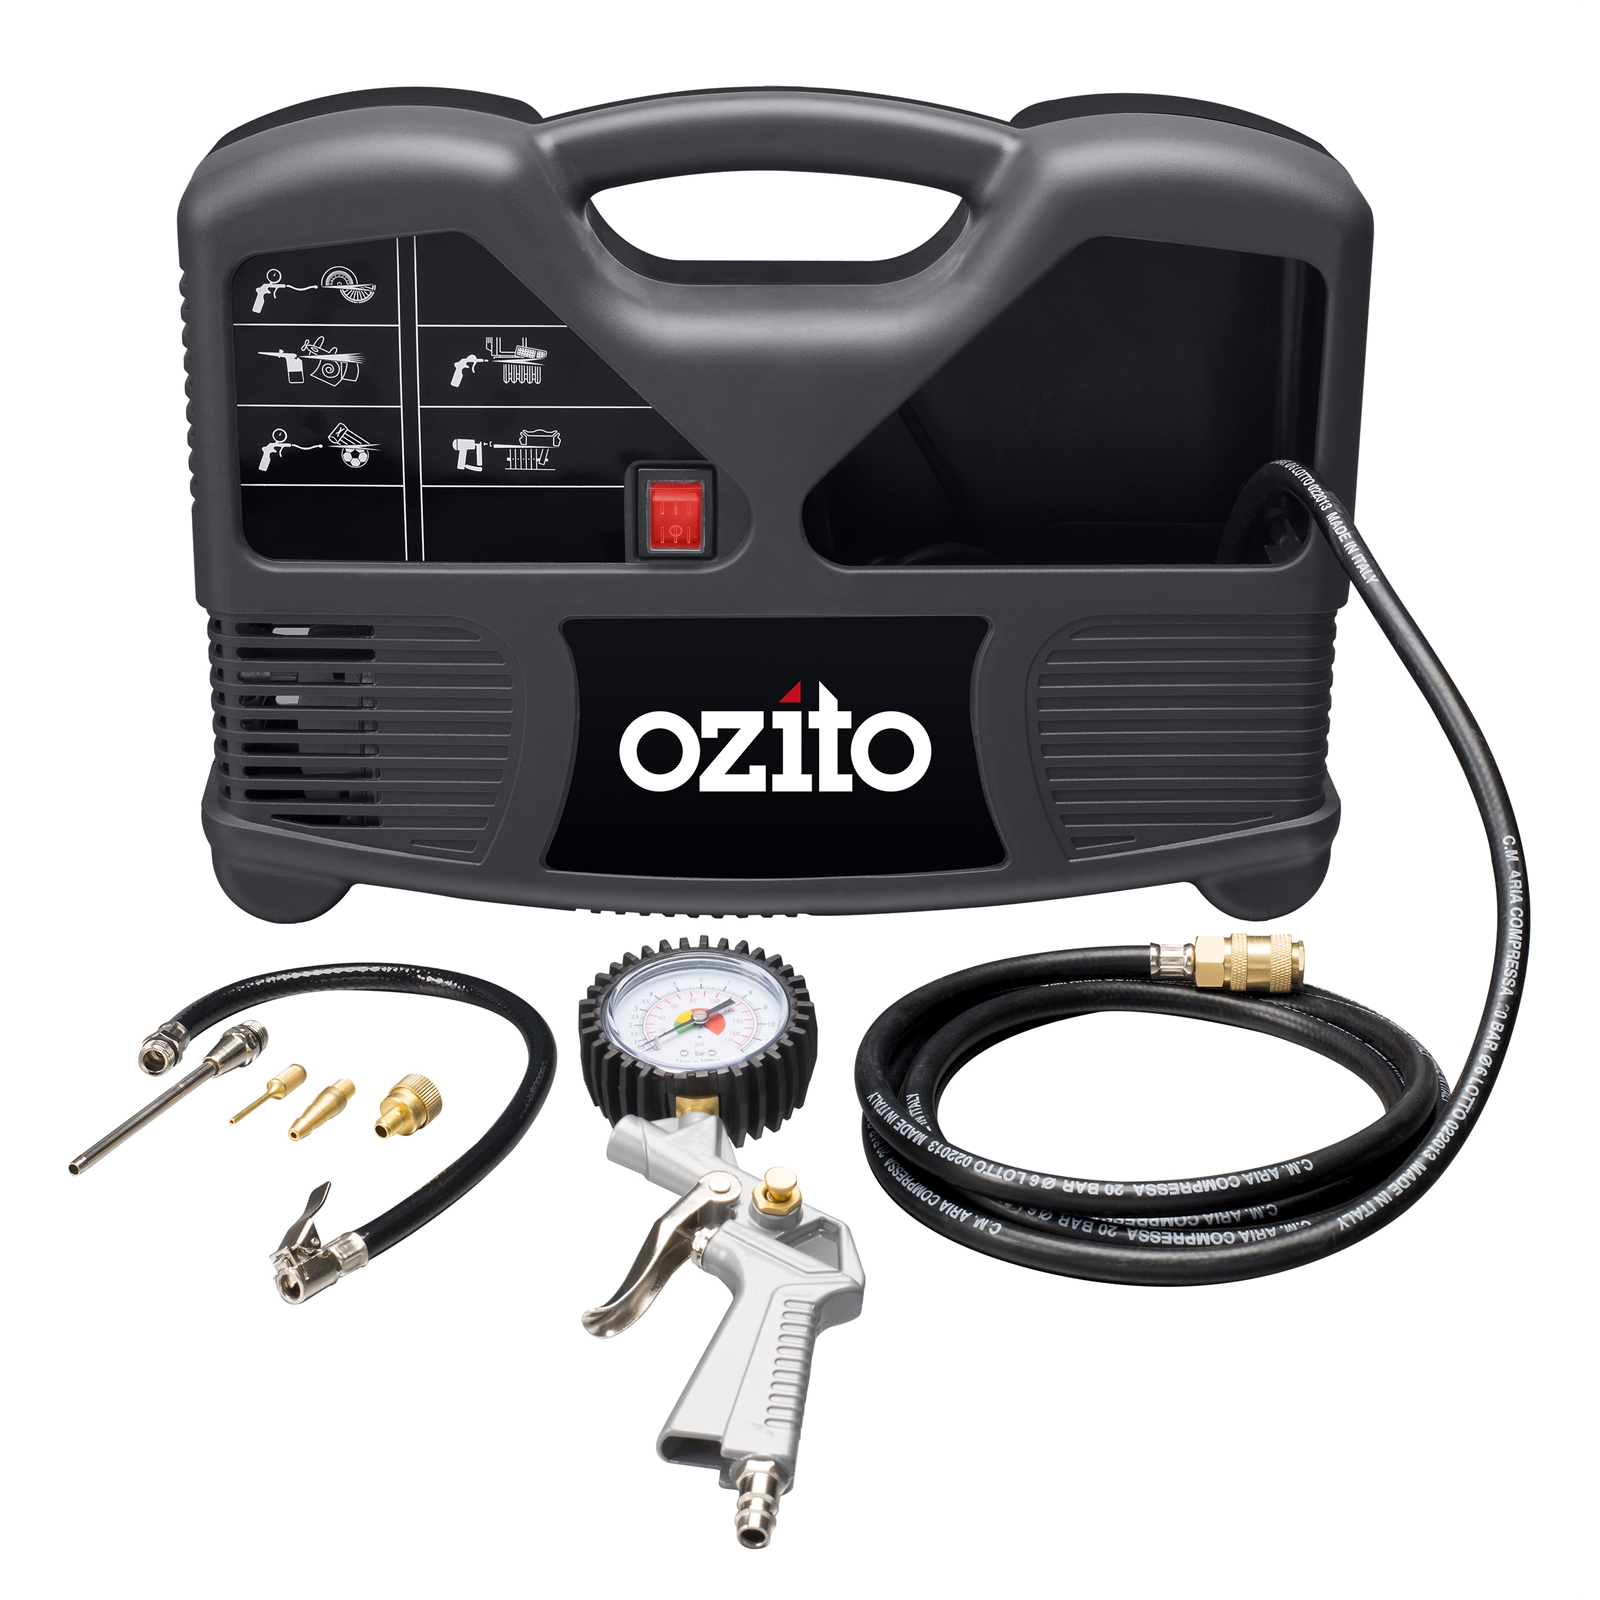 Ozito 1100W Inflate-It Compressor Kit